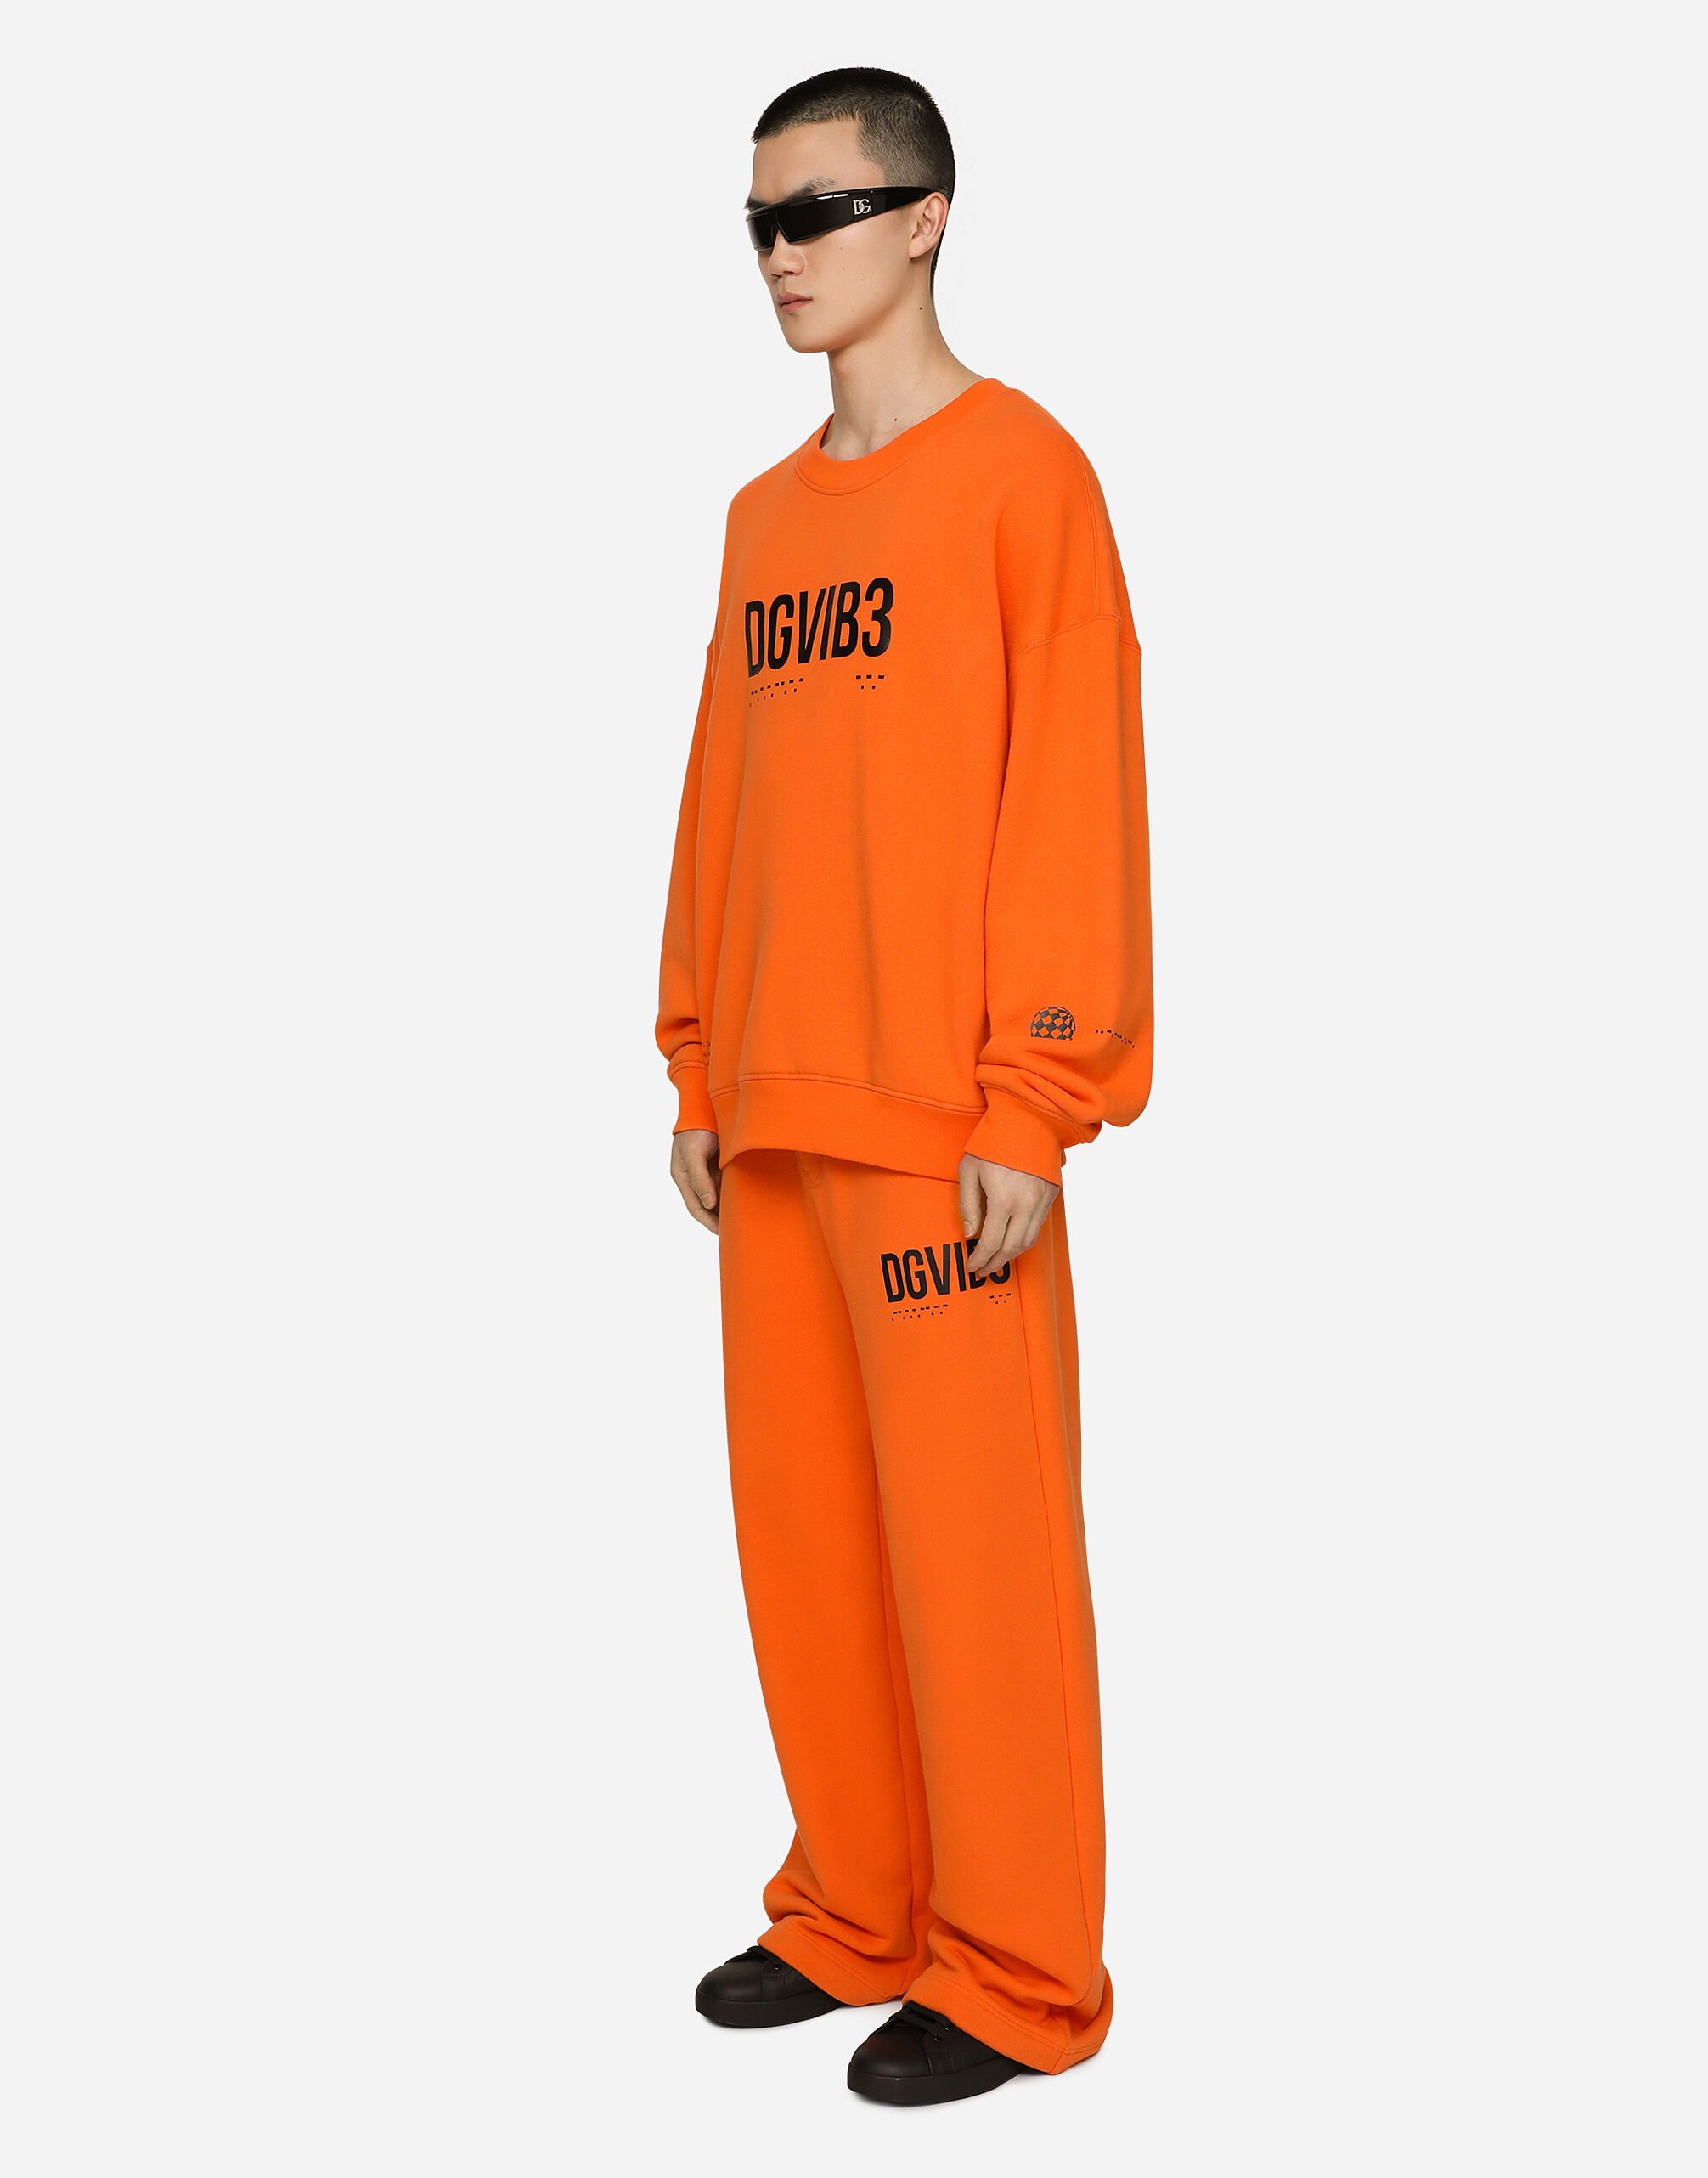 Dolce & Gabbana Jersey jogging pants with DGVIB3 print and logo Orange G9AQVTG7K3G